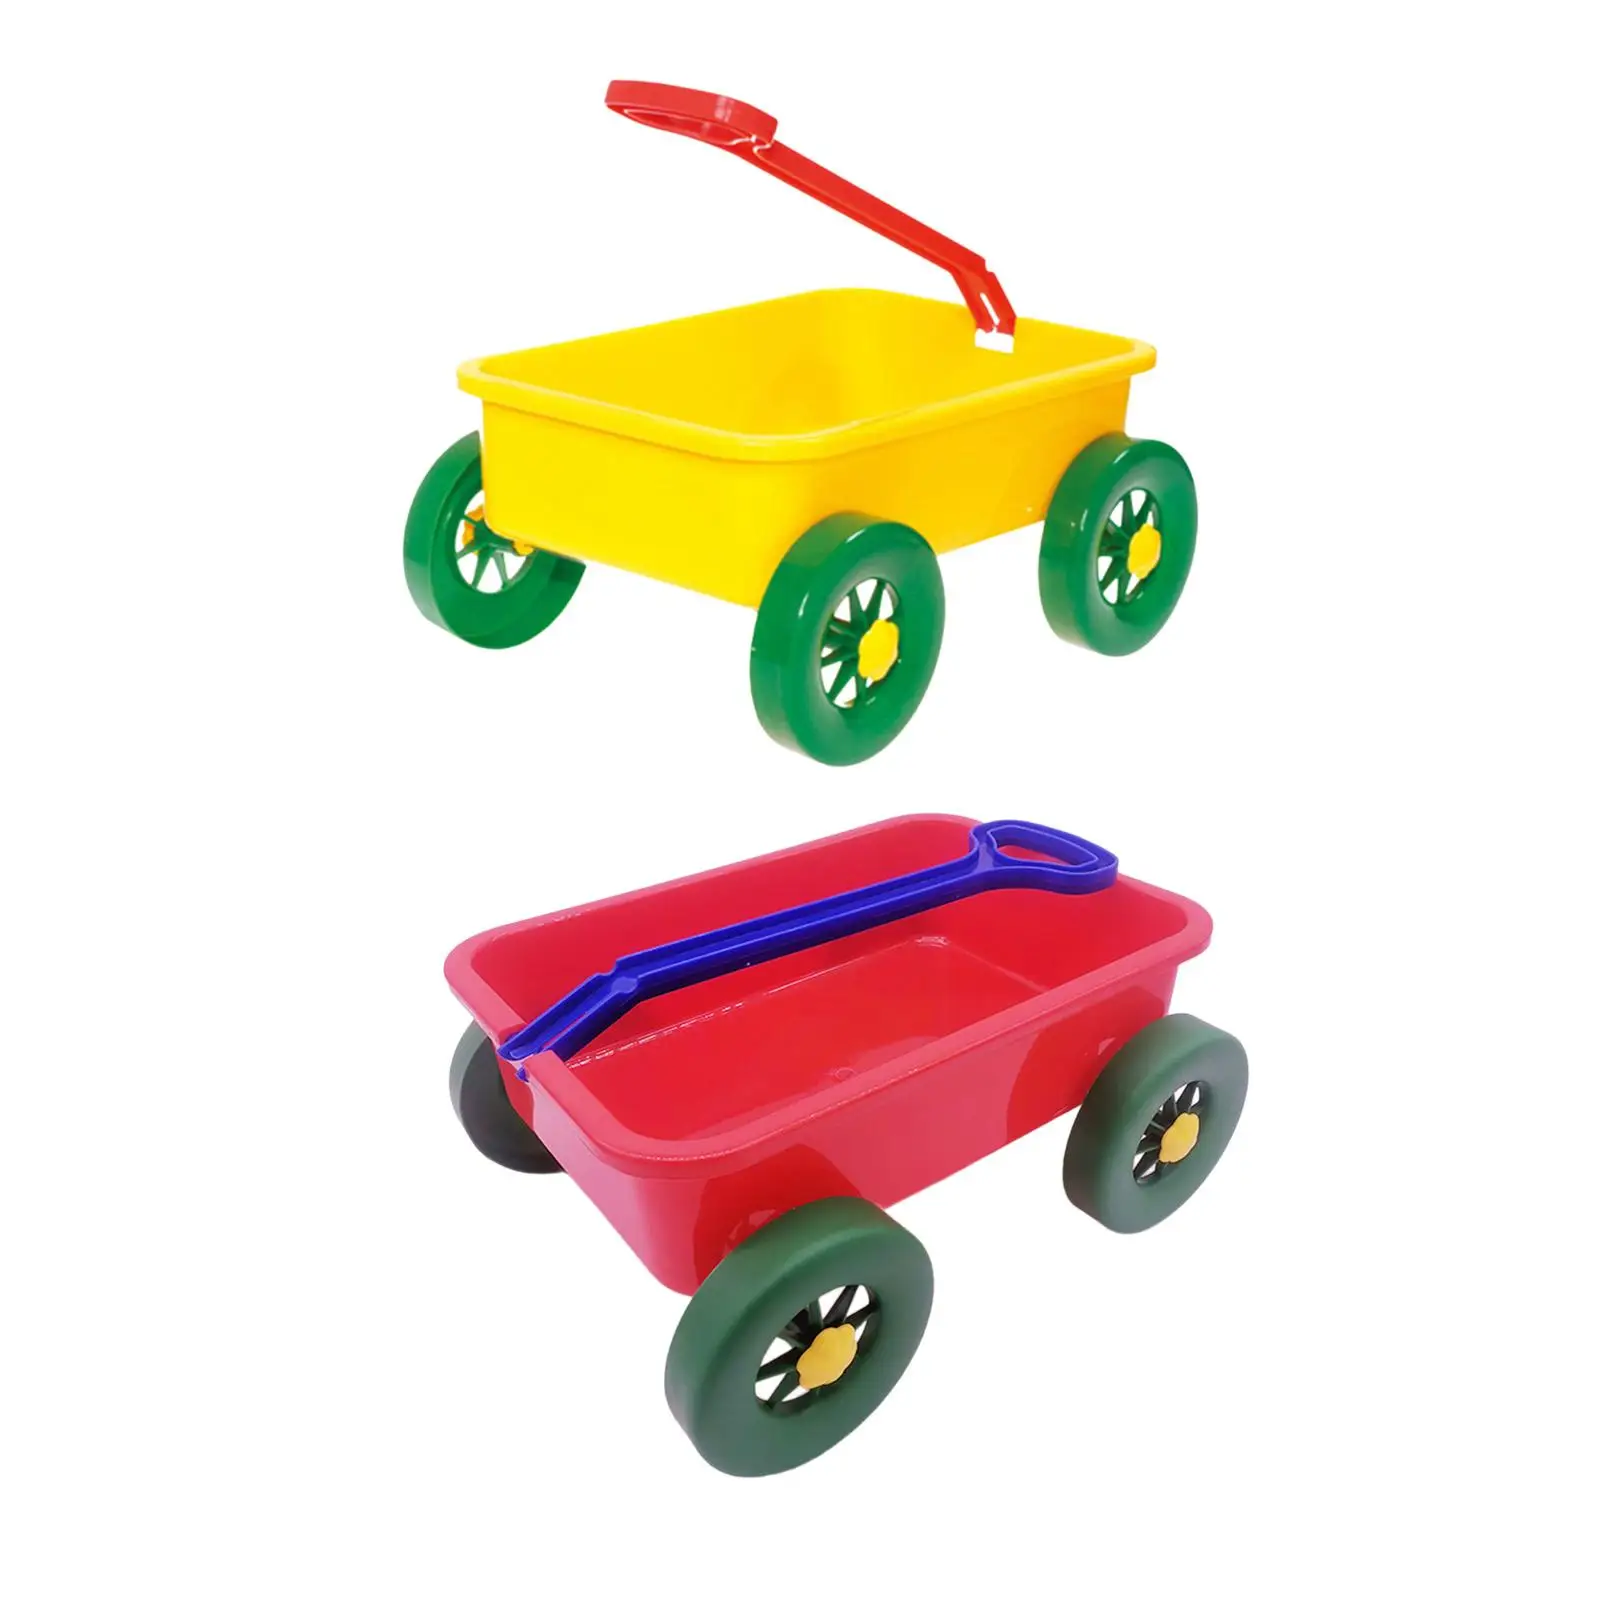 

Kids Wagon Toy Beach Activities Outdoor Indoor Toy Construction Vehicle Sand Toy Trolley for Seaside Outdoor Indoor Summer Beach